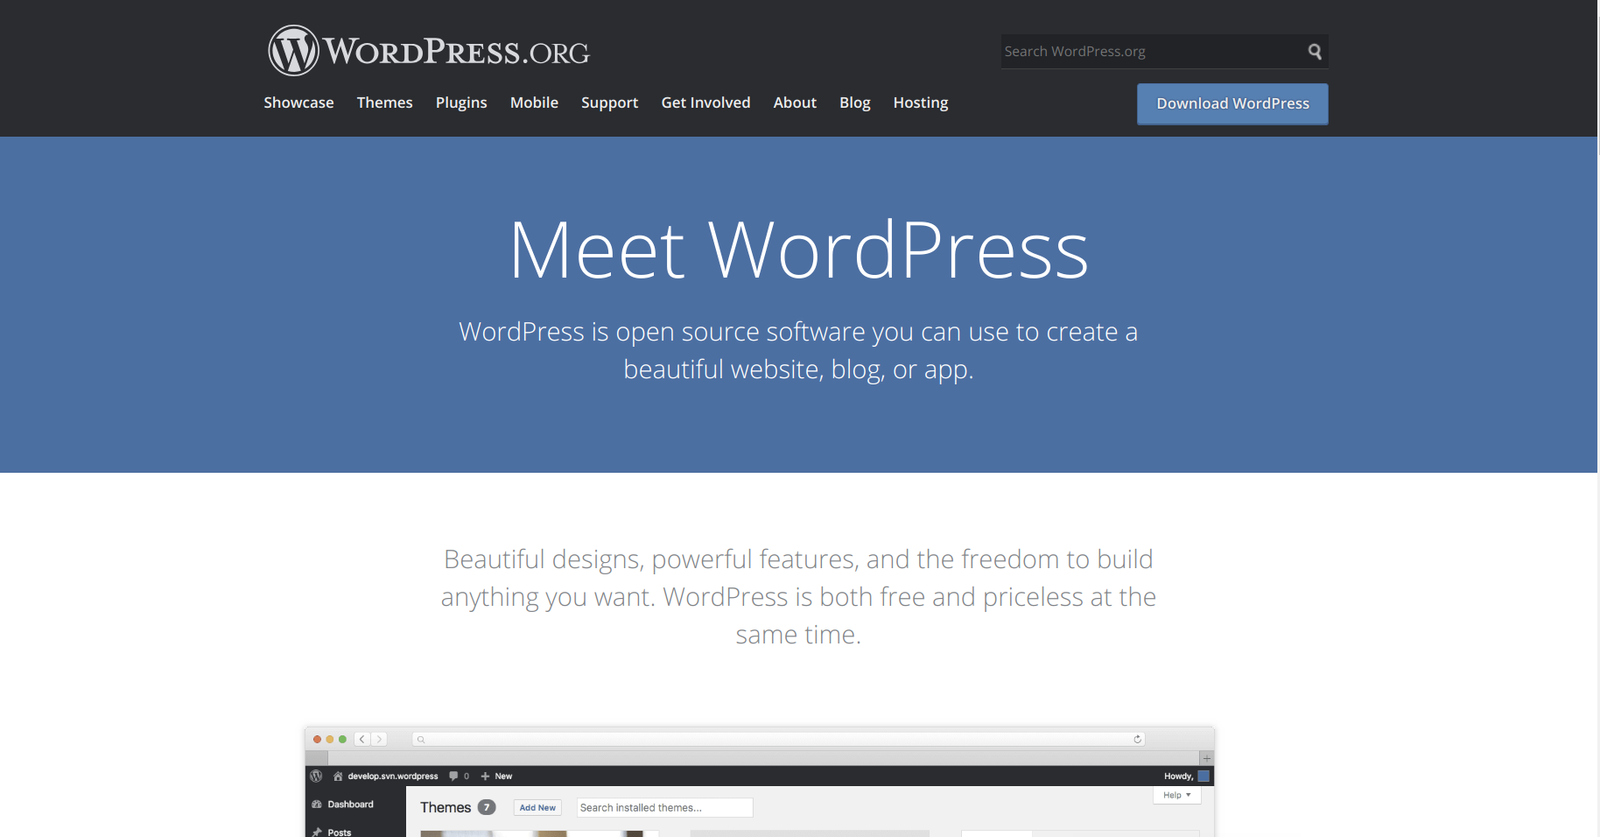 wordpress org homepage